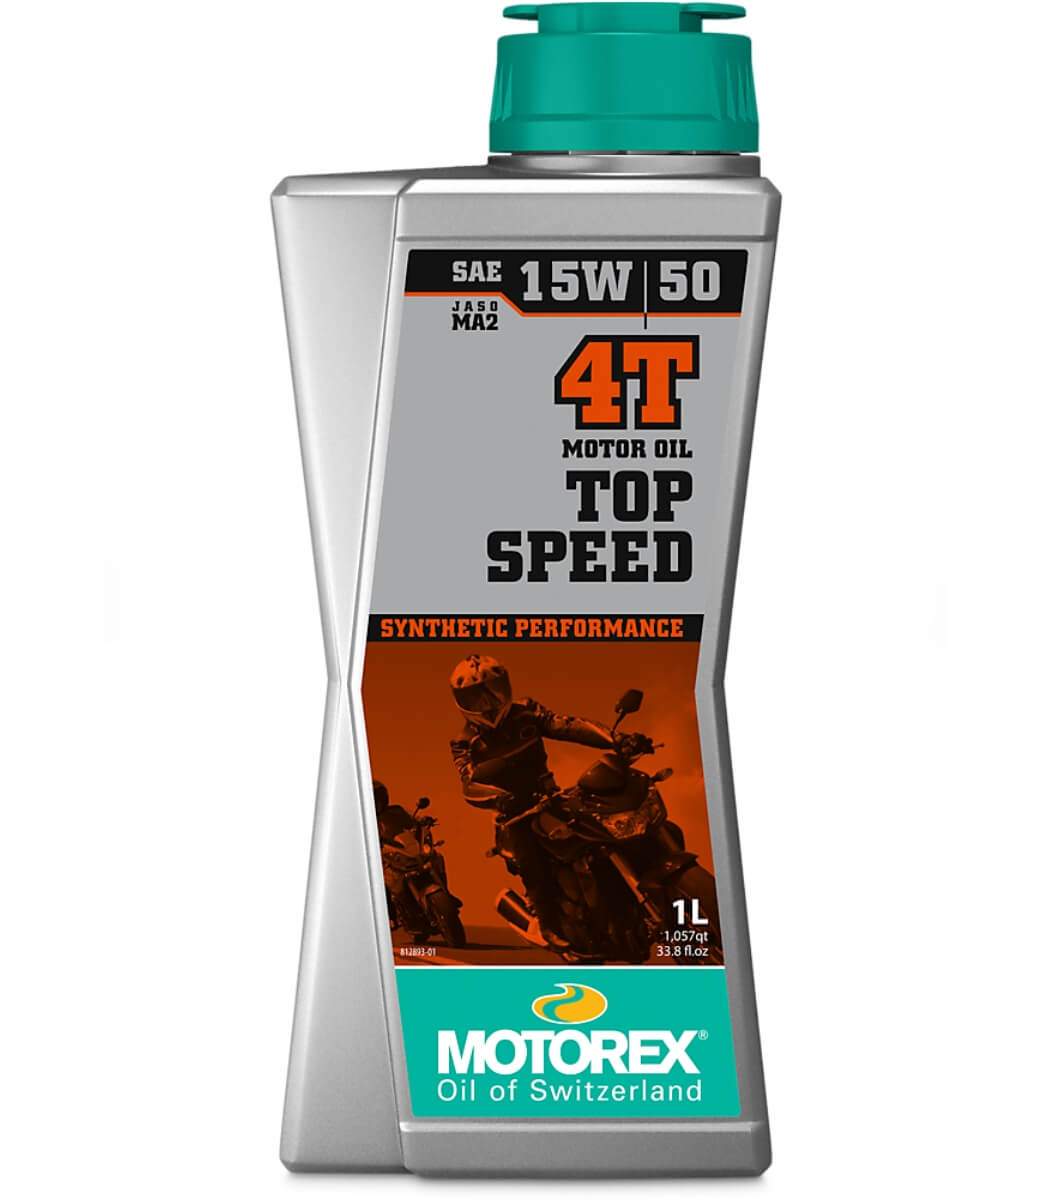 Motorex 4T Top Speed 15W/50